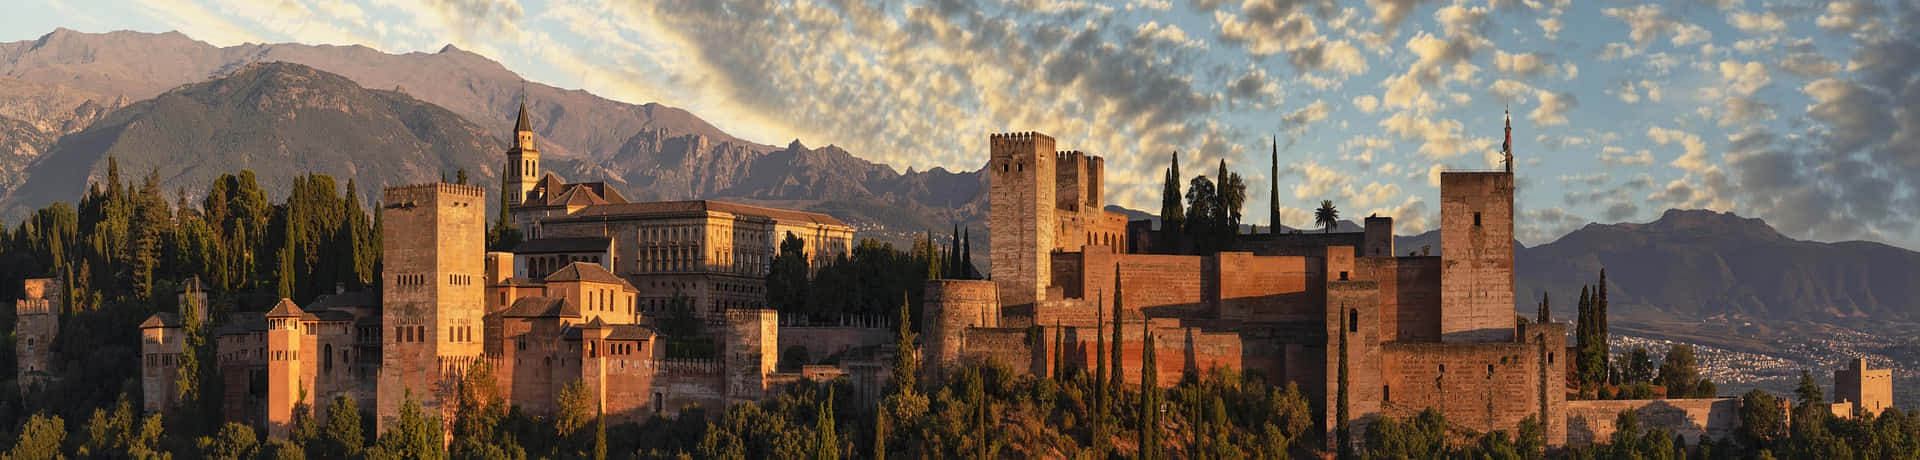 Beautiful Alhambra Palace Panoramic Picture